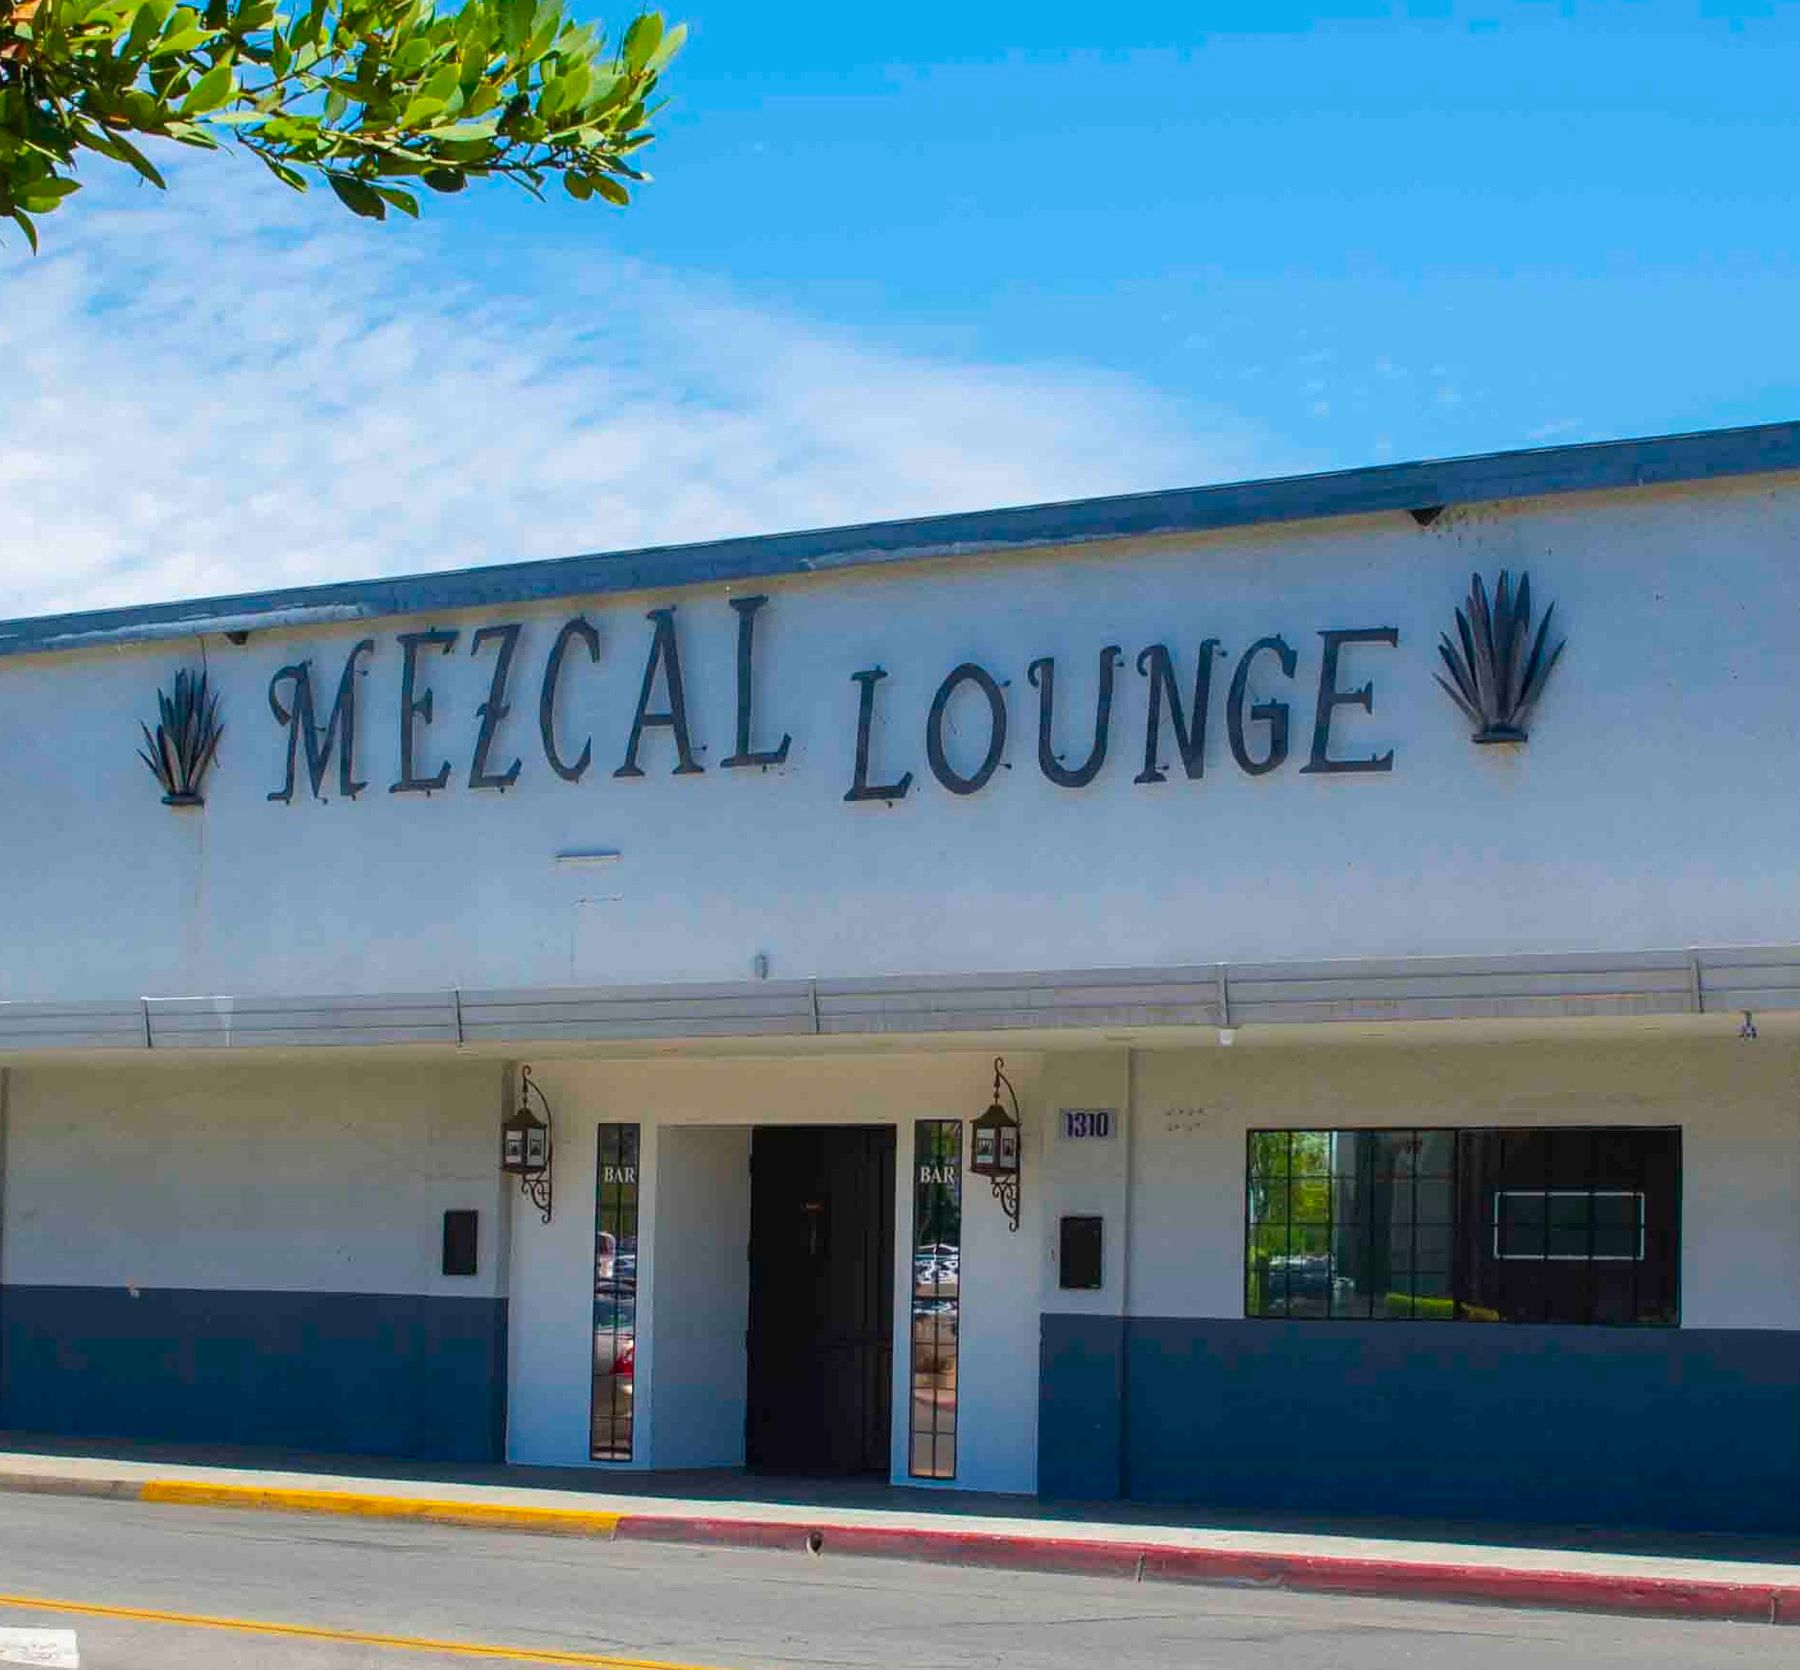 Mezcal Lounge